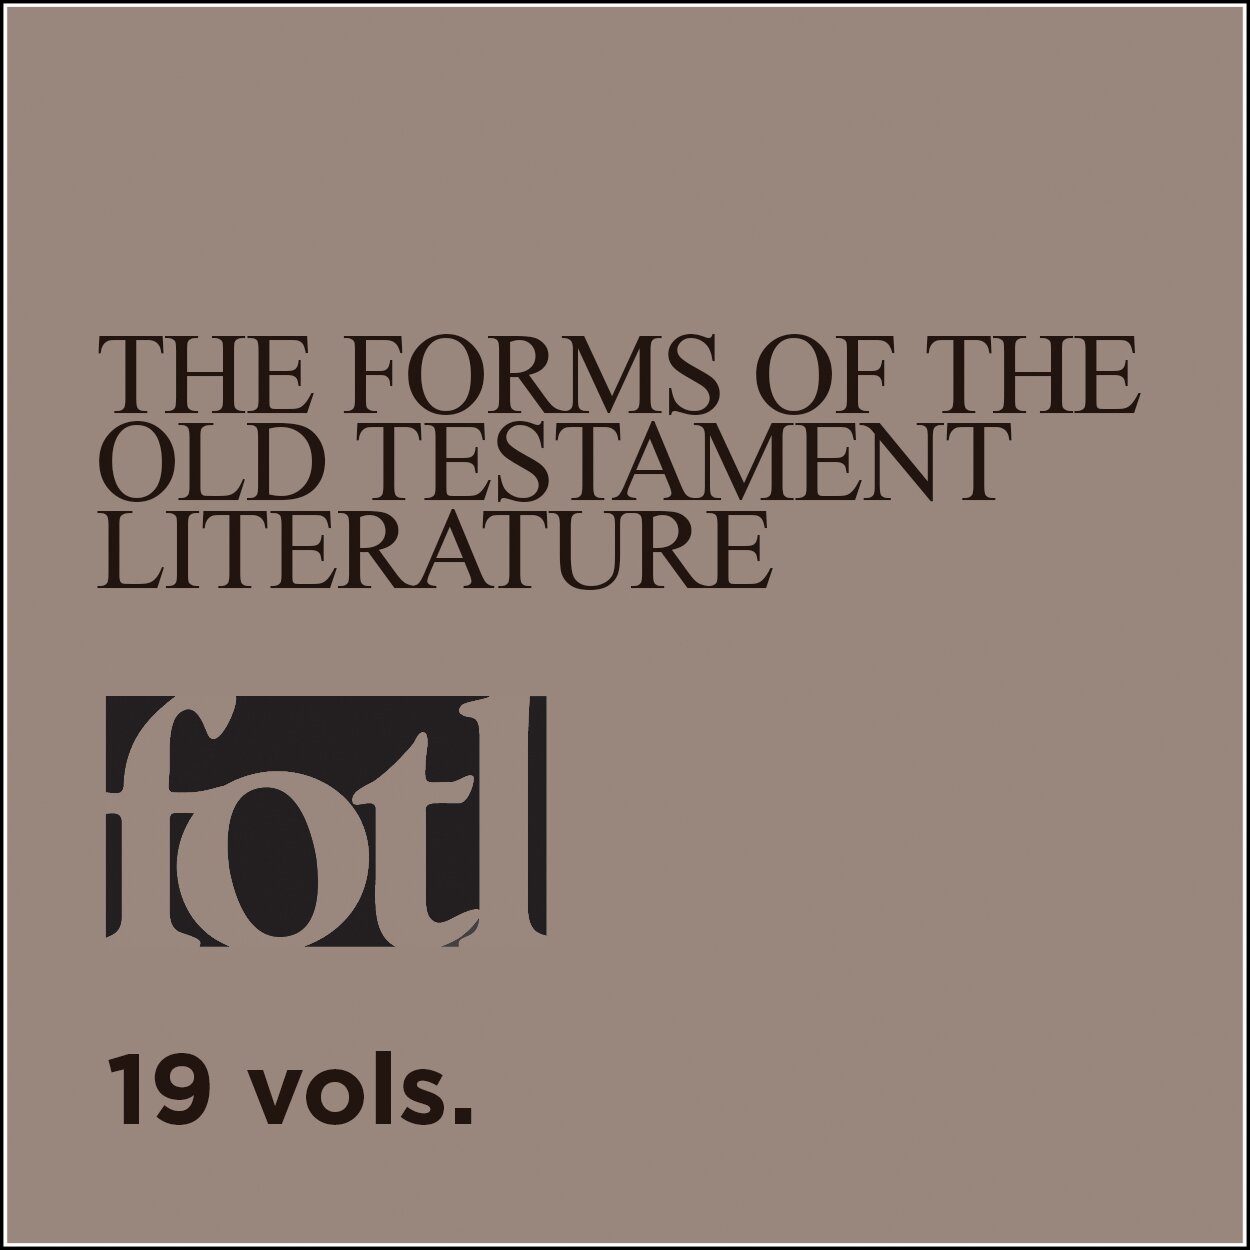 Forms of the Old Testament Literature Series | FOTL (19 vols.)